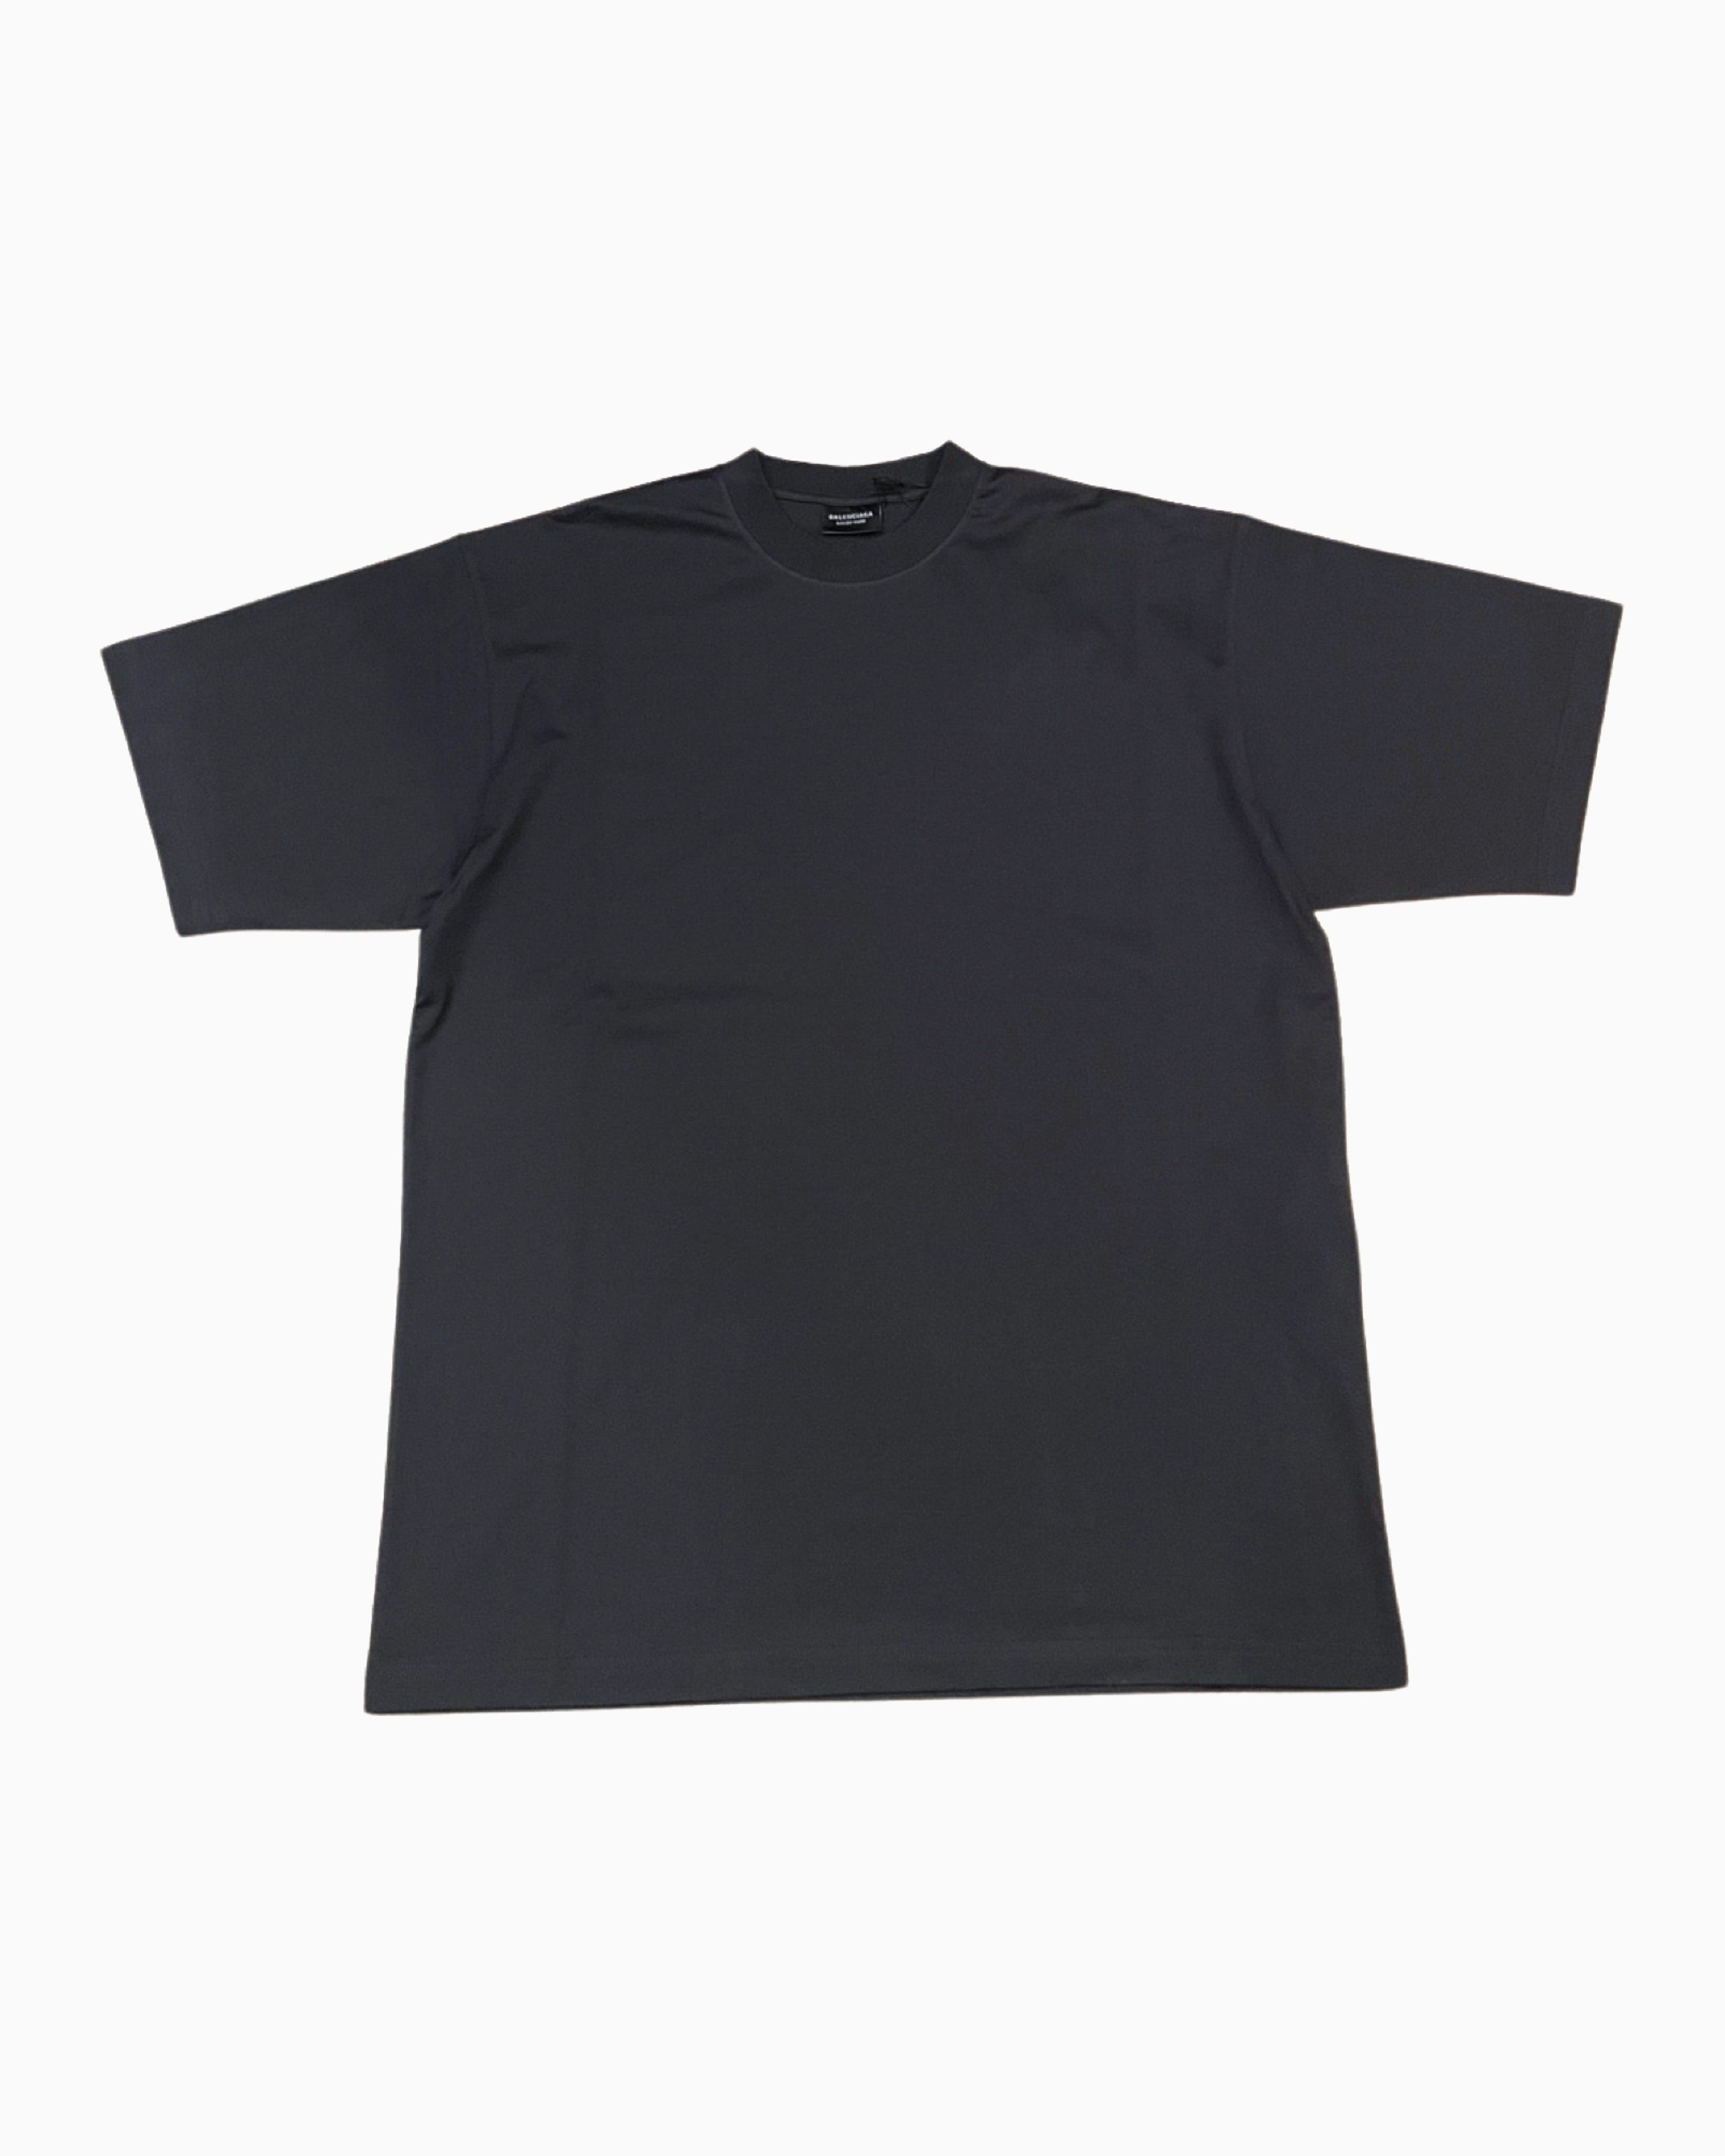 Balenciaga Garde-Robe Care Label T-shirt – FUTURO